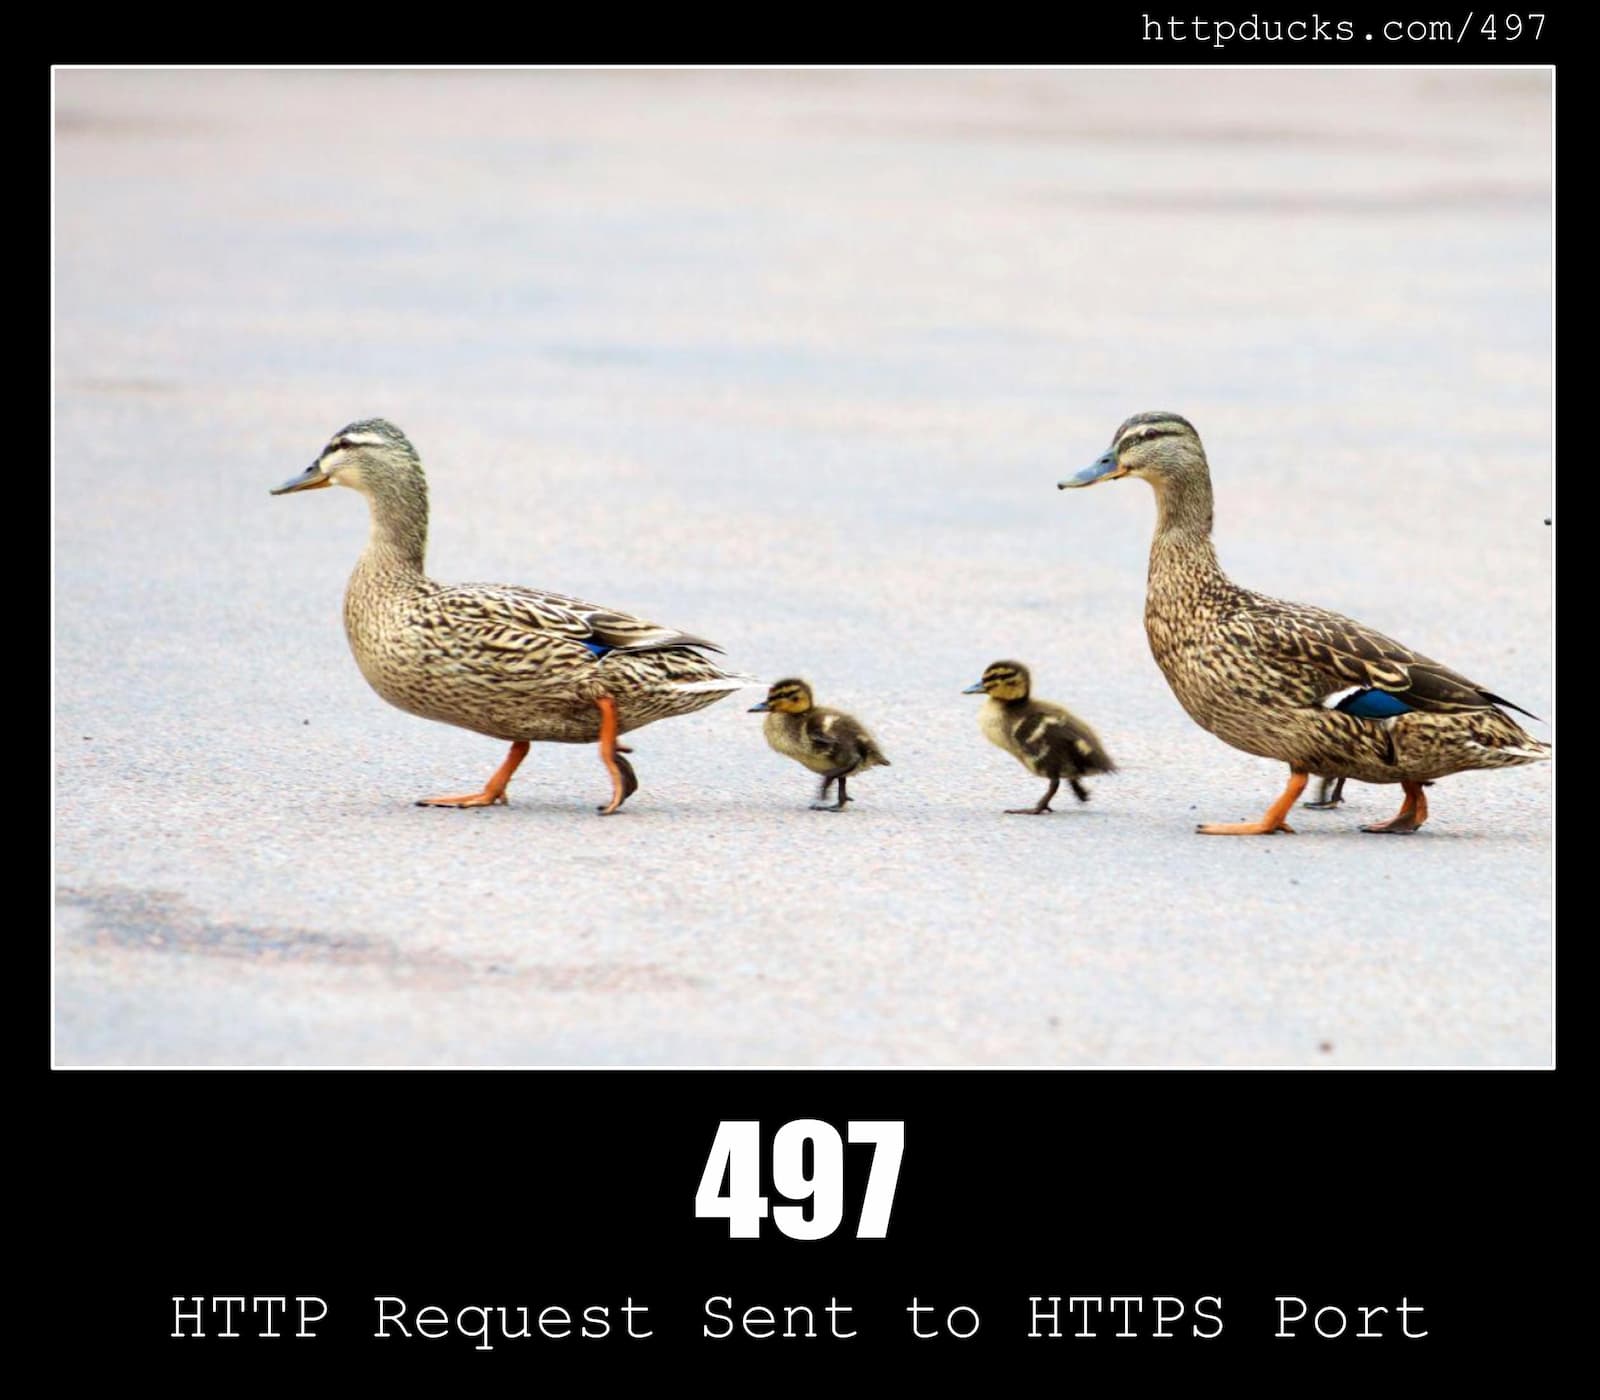 HTTP Status Code 497 HTTP Request Sent to HTTPS Port & Ducks